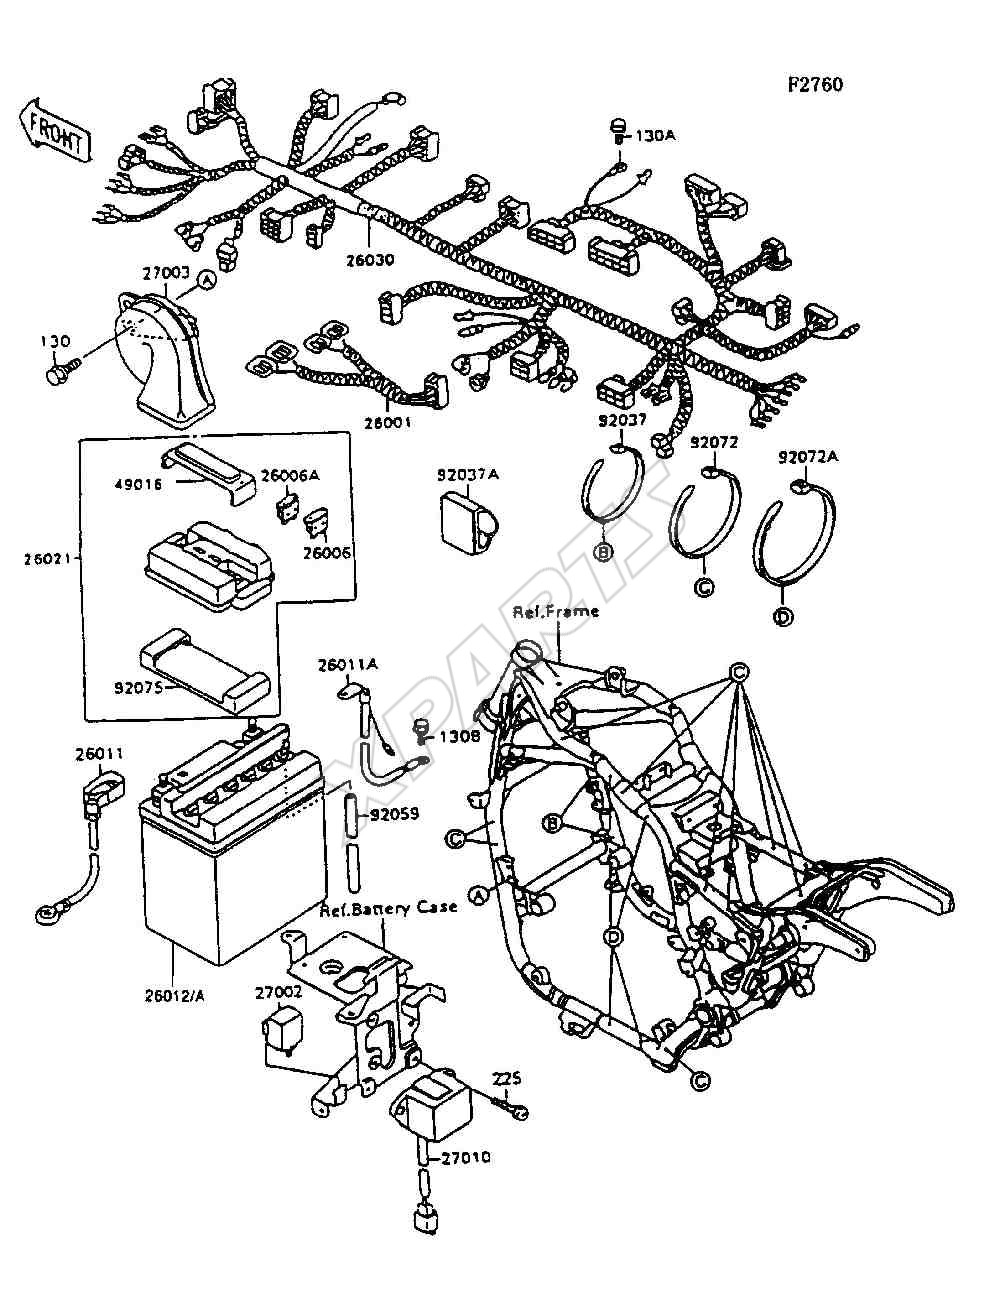 Wiring Diagram Kawasaki Vulcan 1500 - Wiring Diagram Schemas